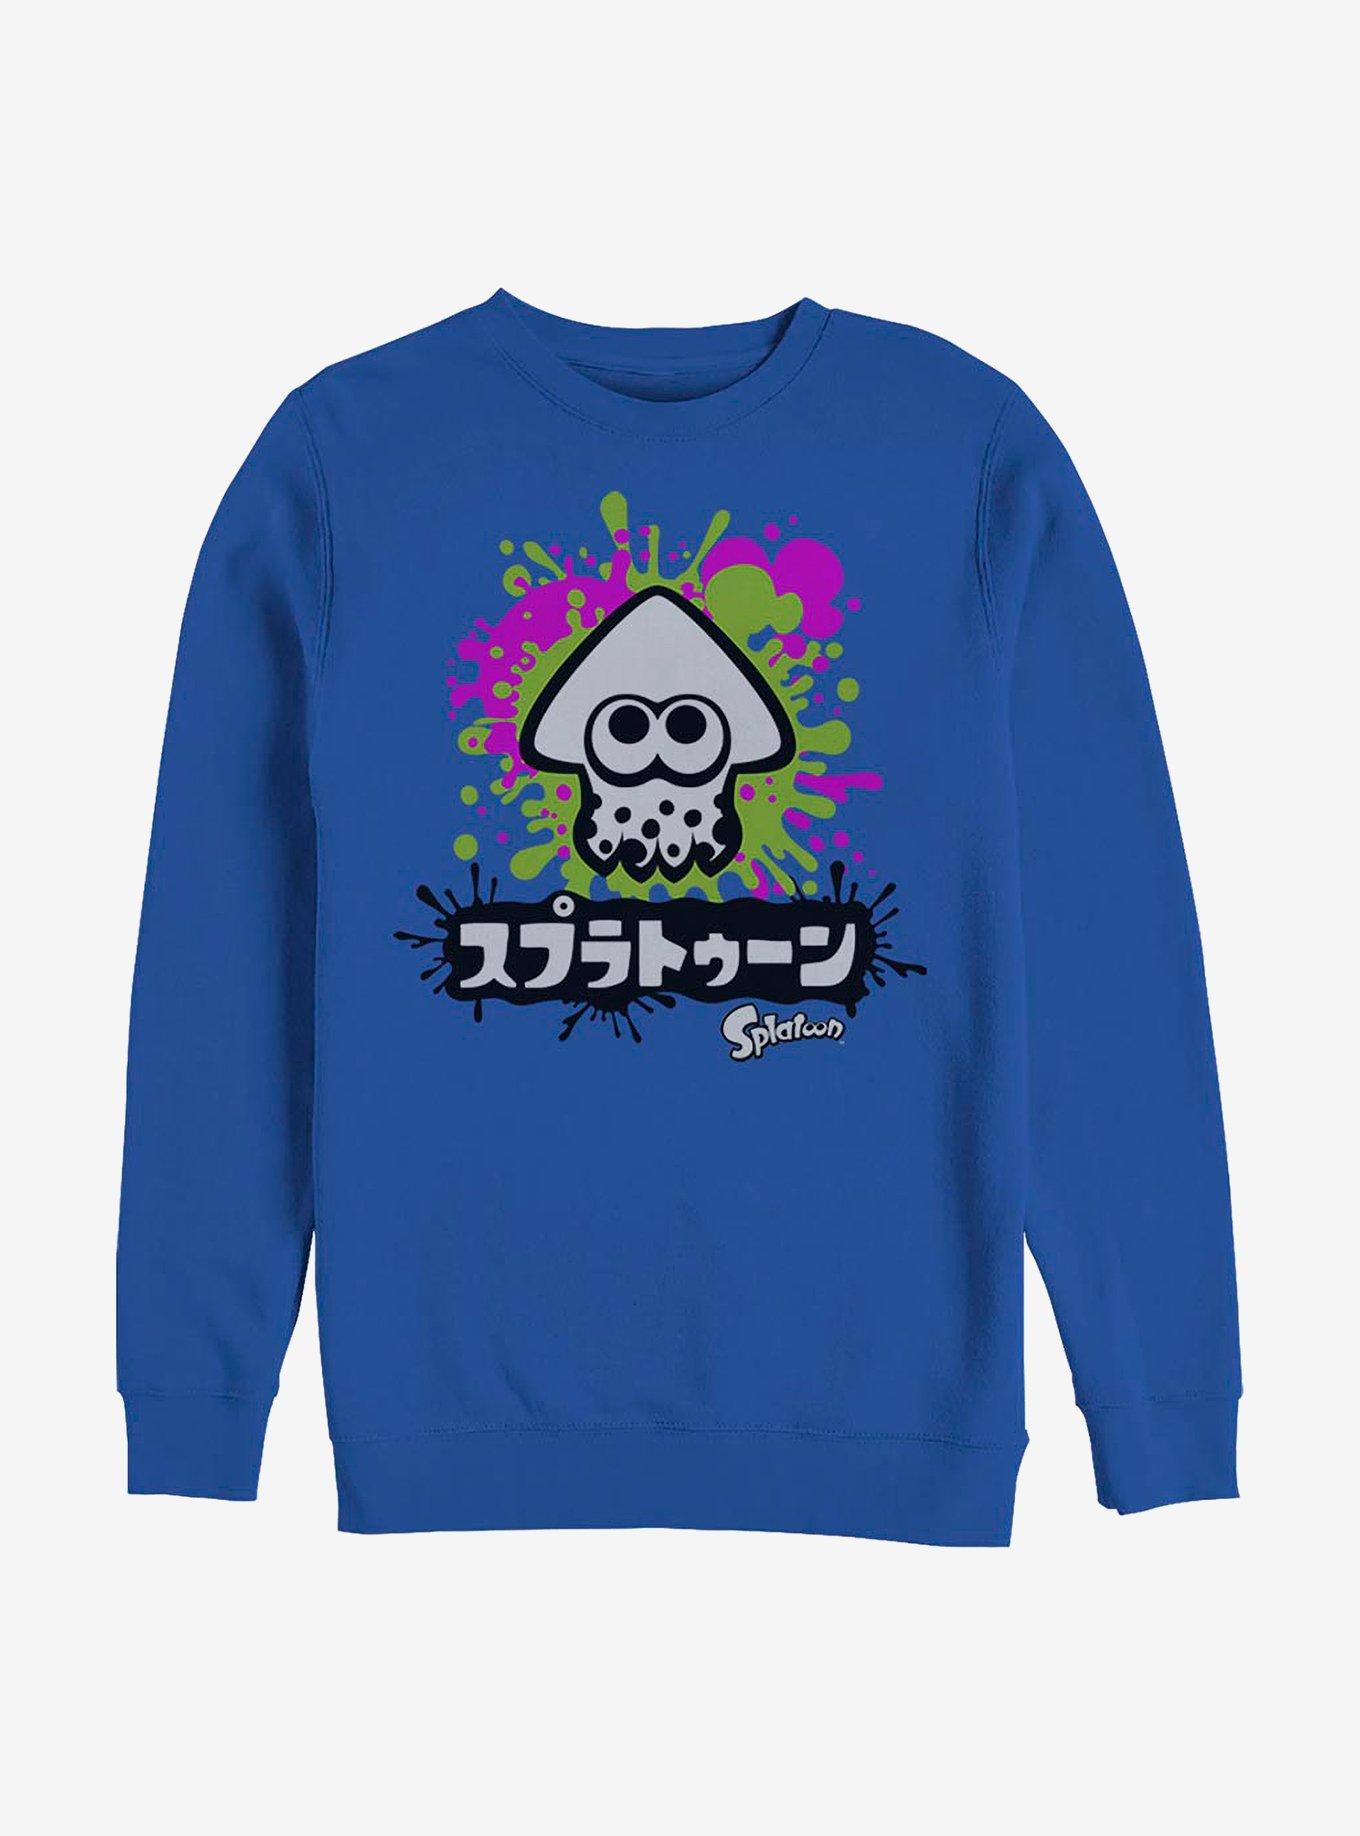 Nintendo Splatoon Inkling Crew Sweatshirt, ROYAL, hi-res